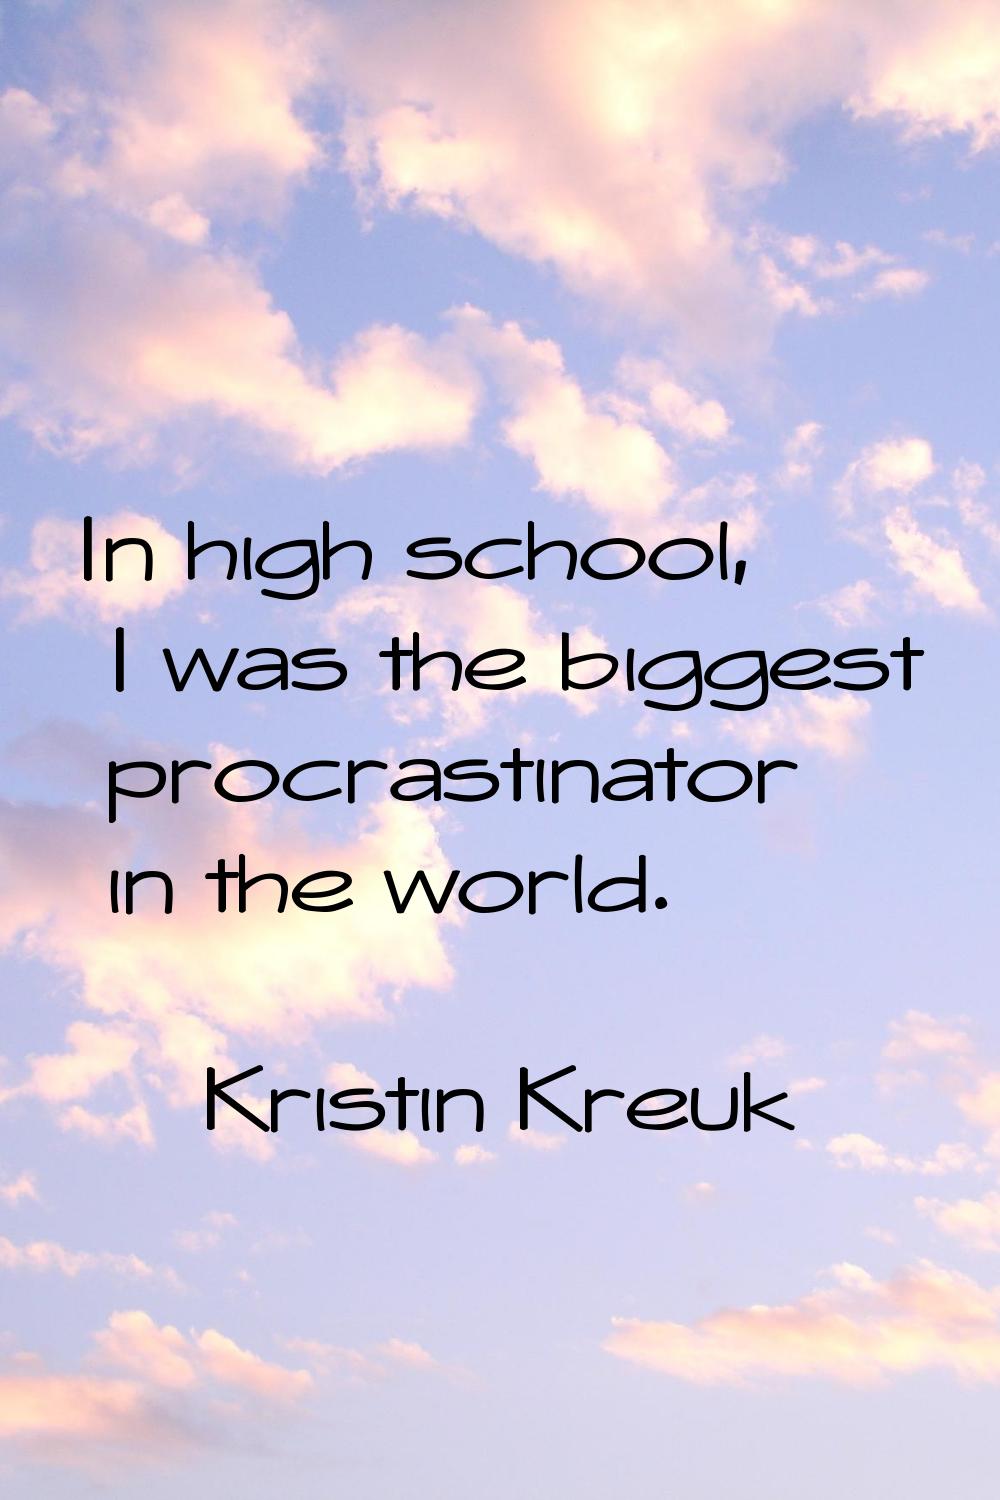 In high school, I was the biggest procrastinator in the world.